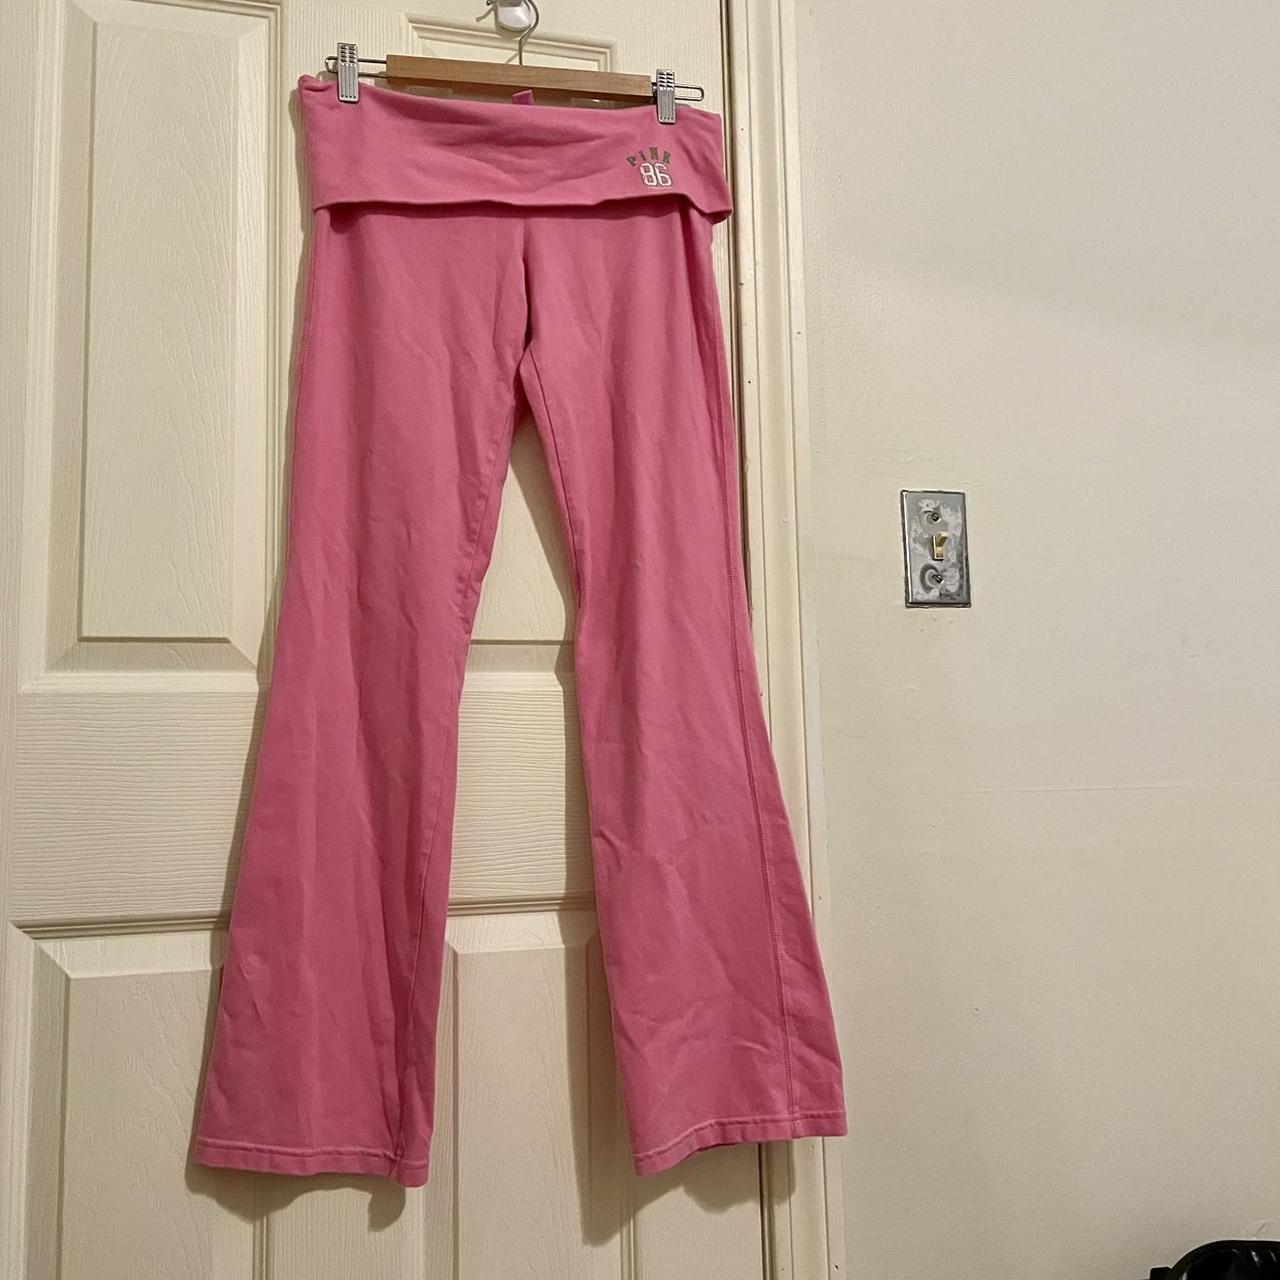 Victorias Secret Love Pink Foldover Yoga Pants. I need them all  Victoria secret  pink yoga pants, Pink yoga pants, Victoria secret pink